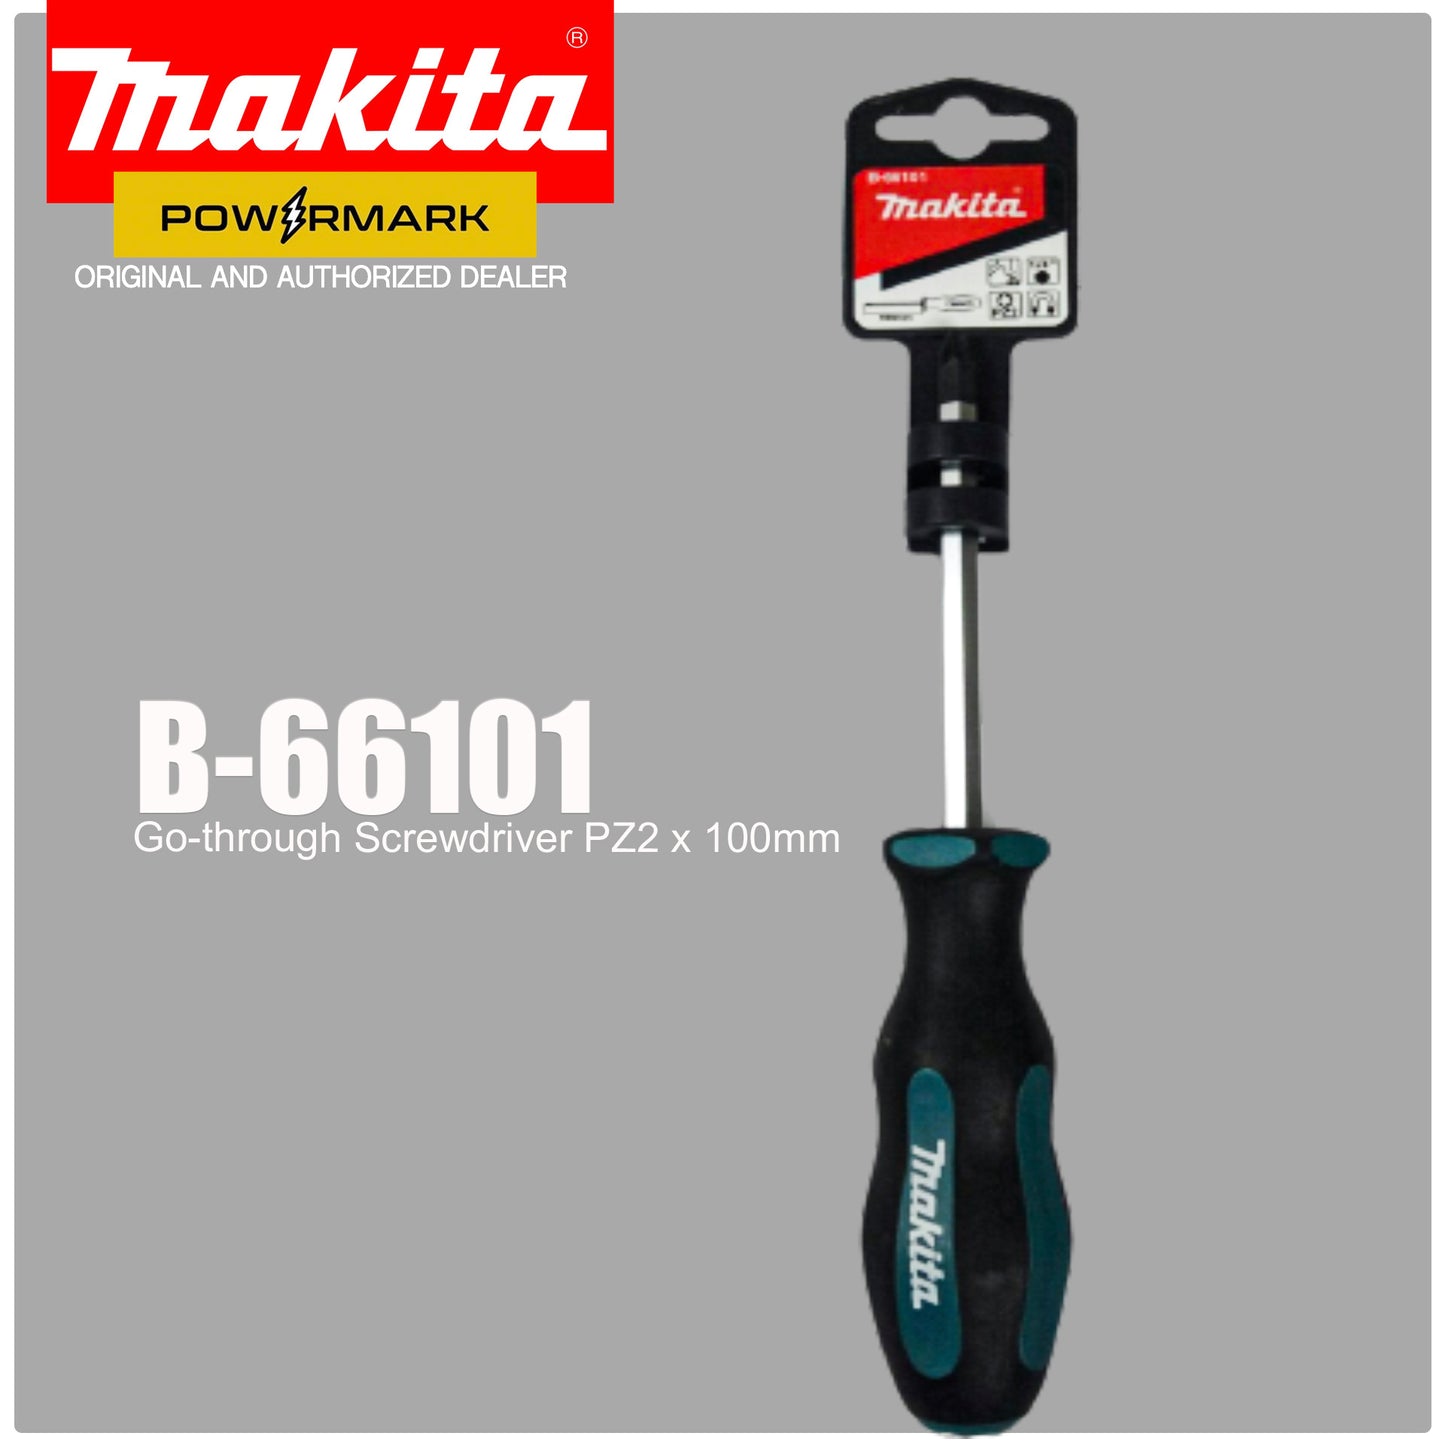 MAKITA B-66101 – Go-through Screwdriver PZ2 x 100mm